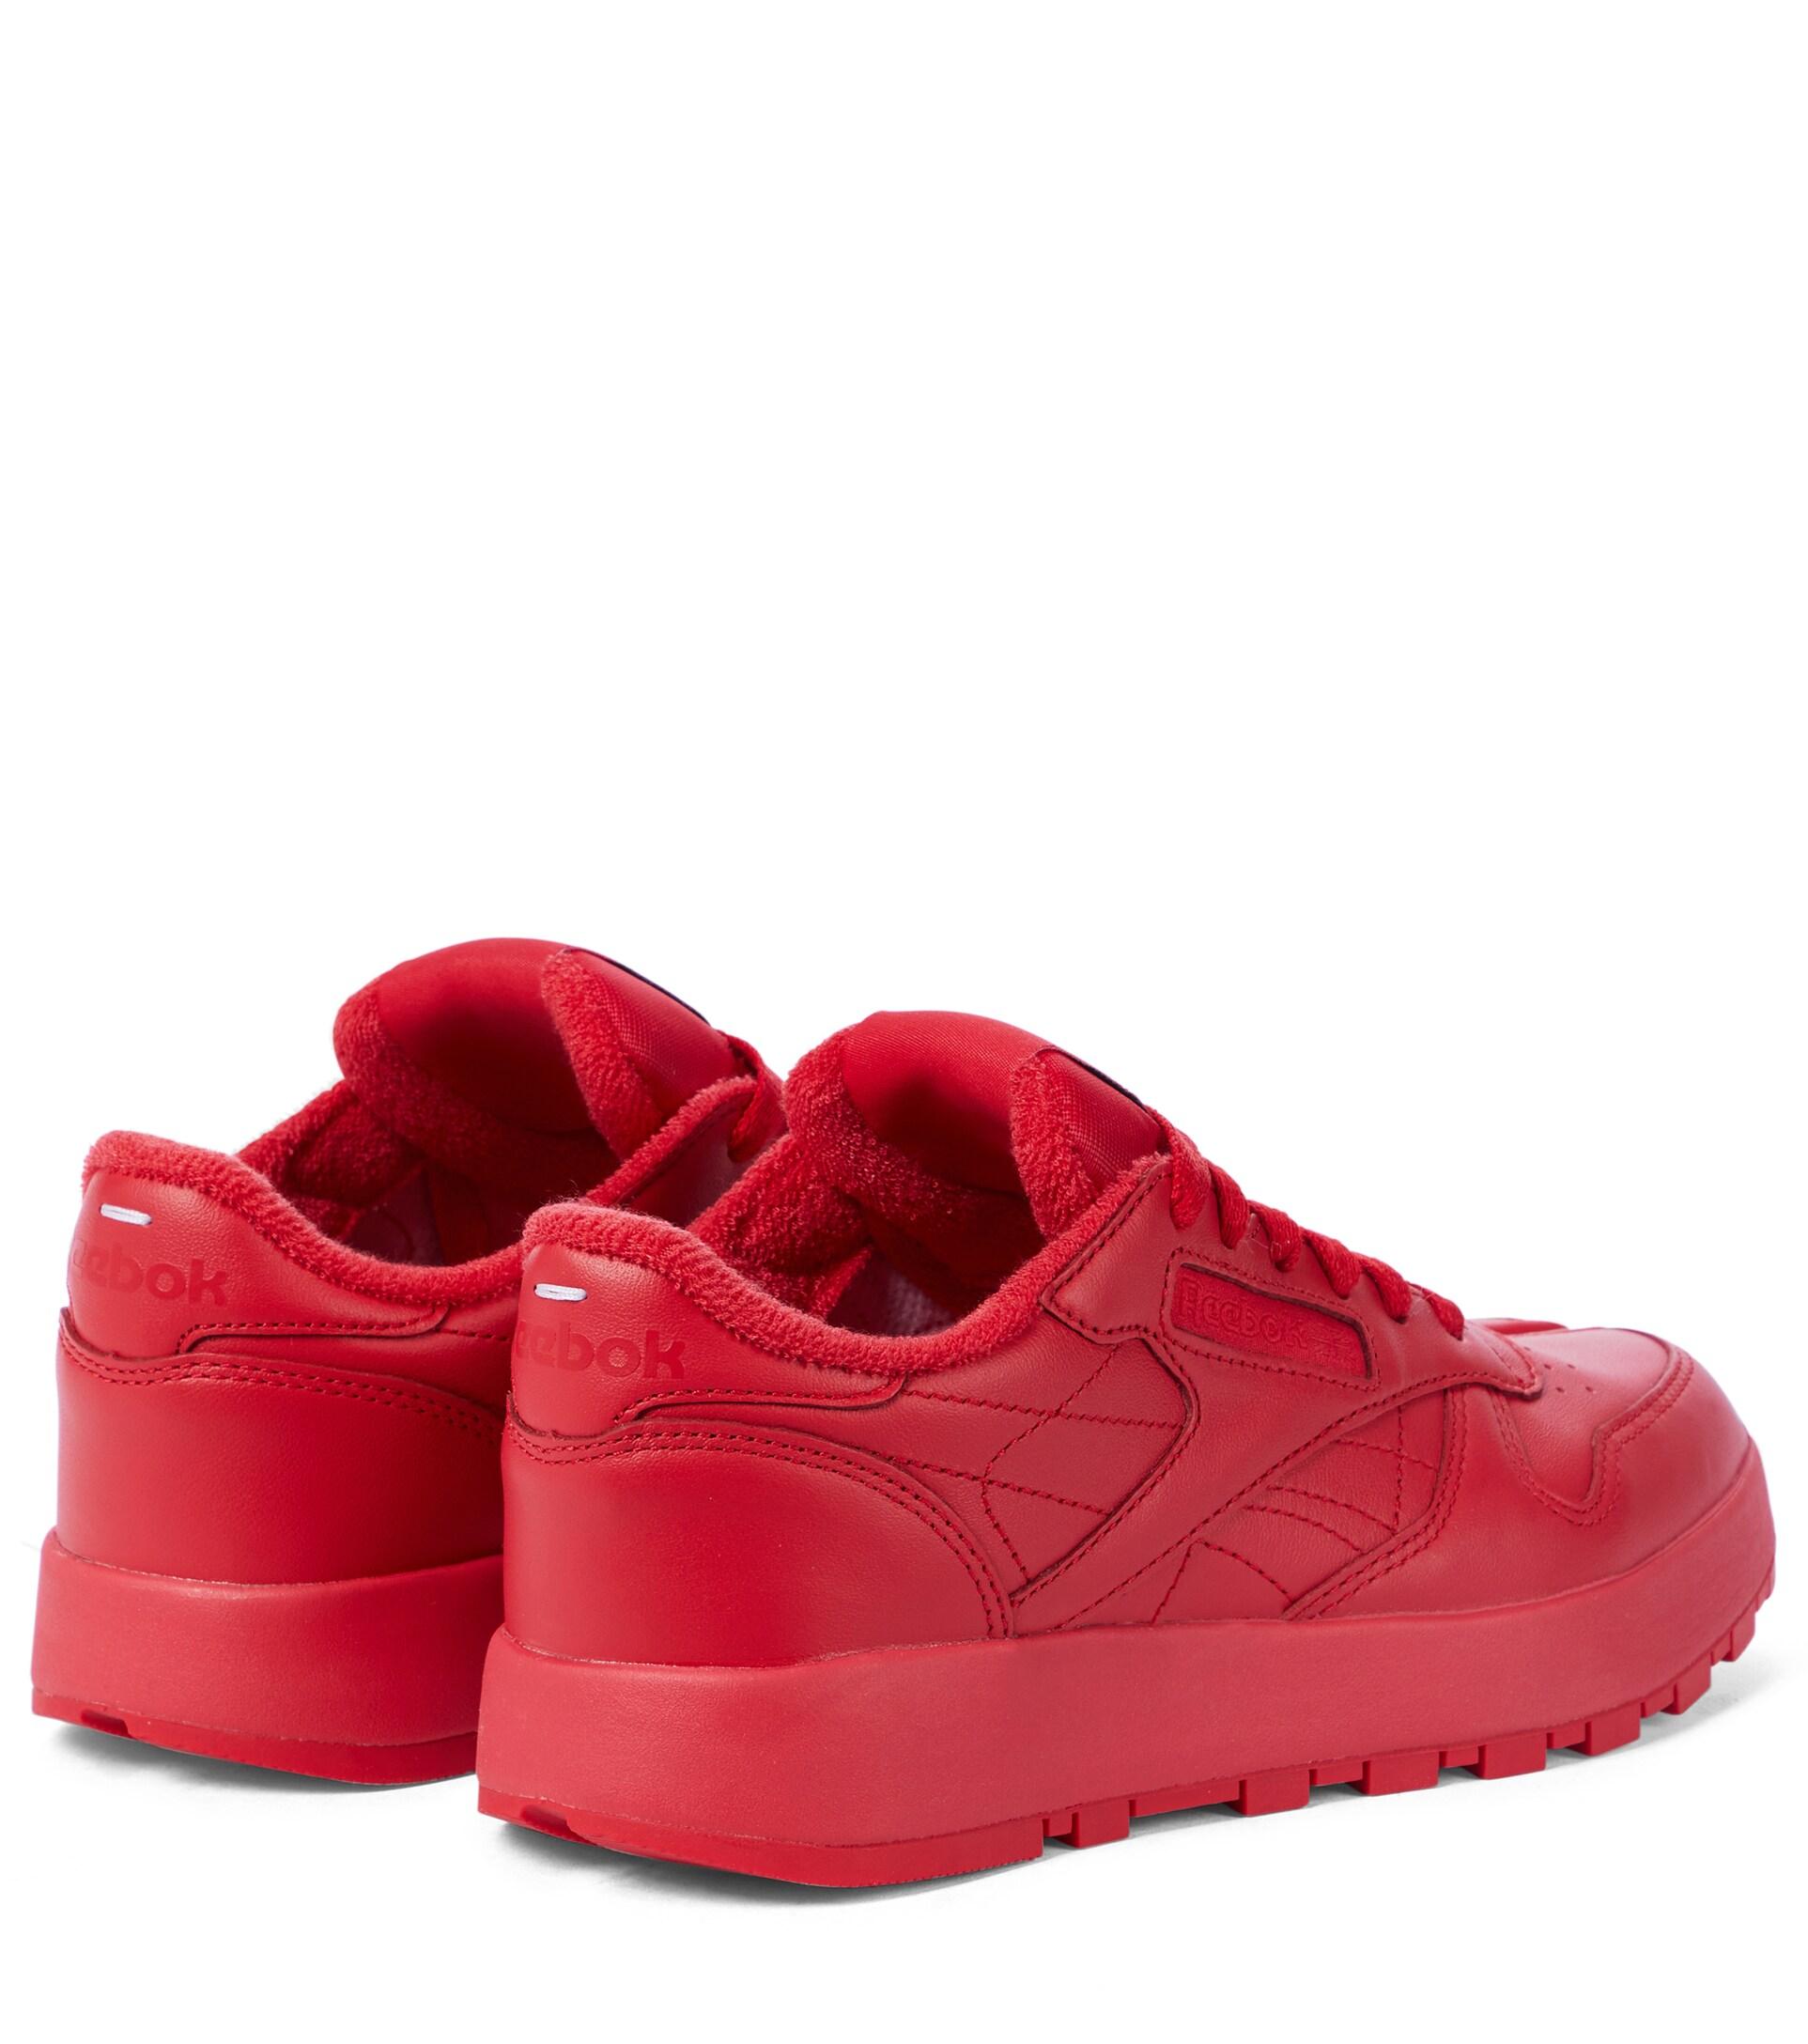 Maison Margiela X Reebok Classic Tabi Leather Sneakers in Red | Lyst